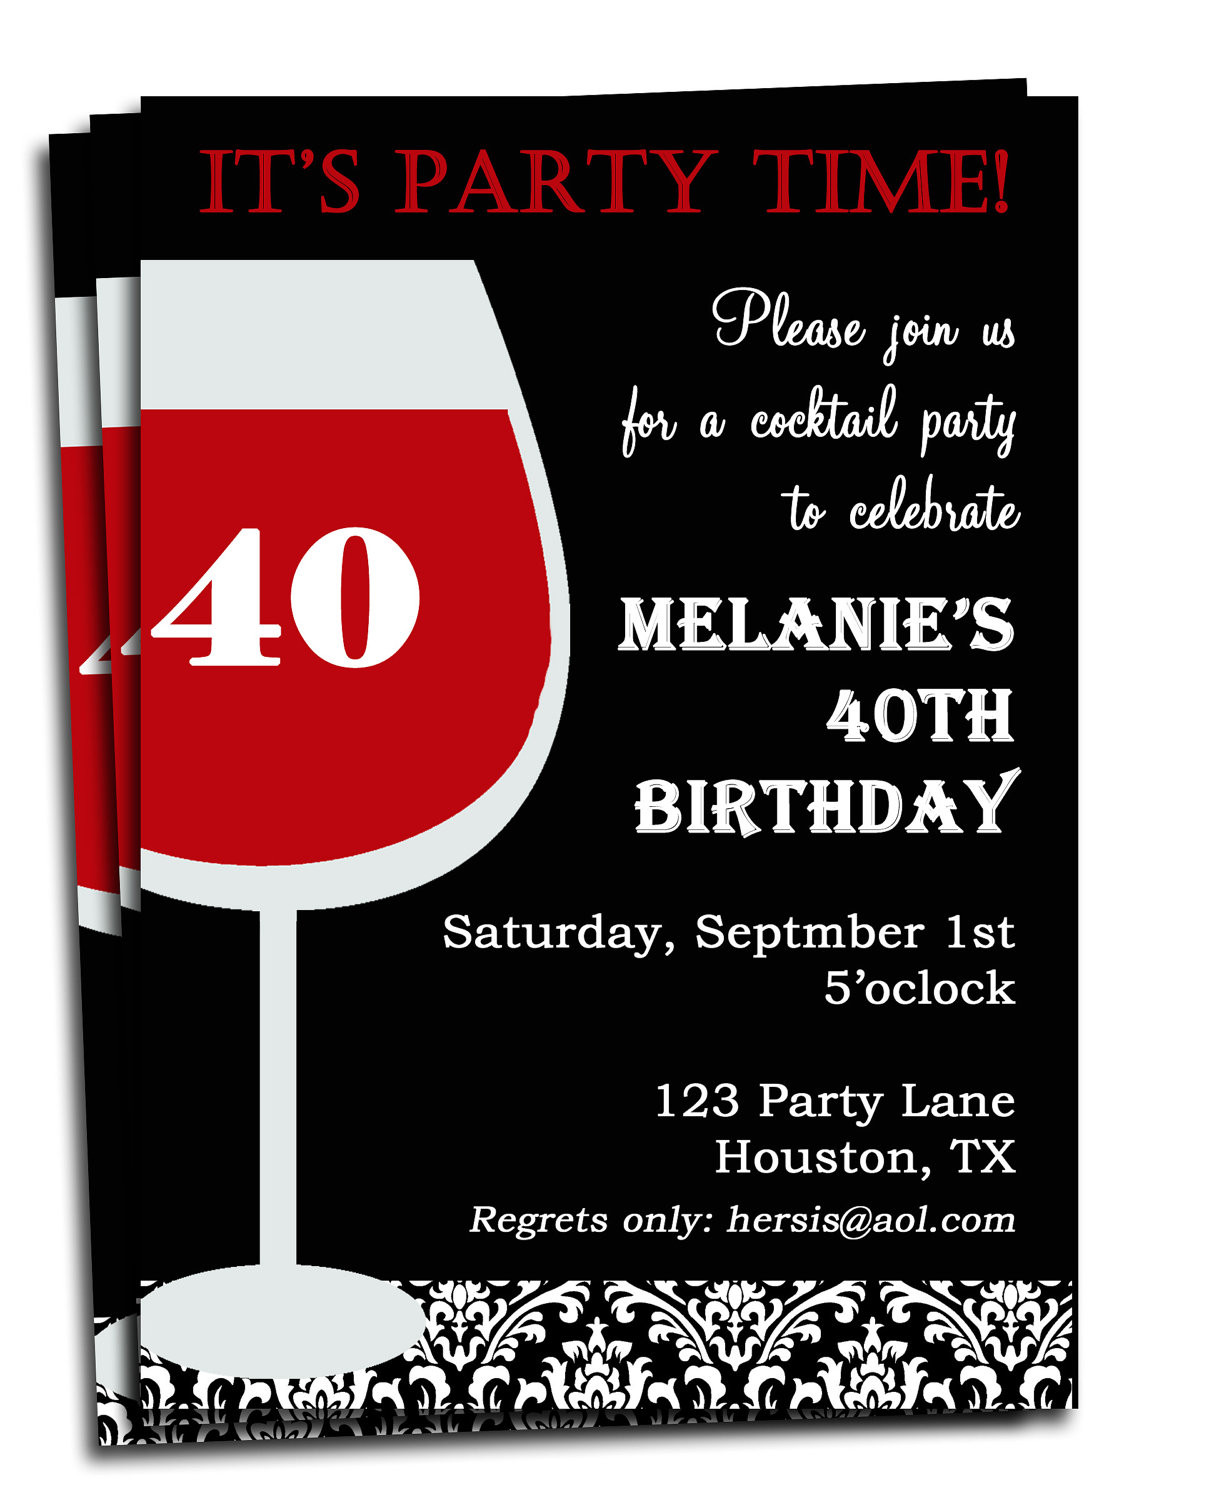 Personalized Birthday Invitations
 FREE Printable Personalized Birthday Invitations for